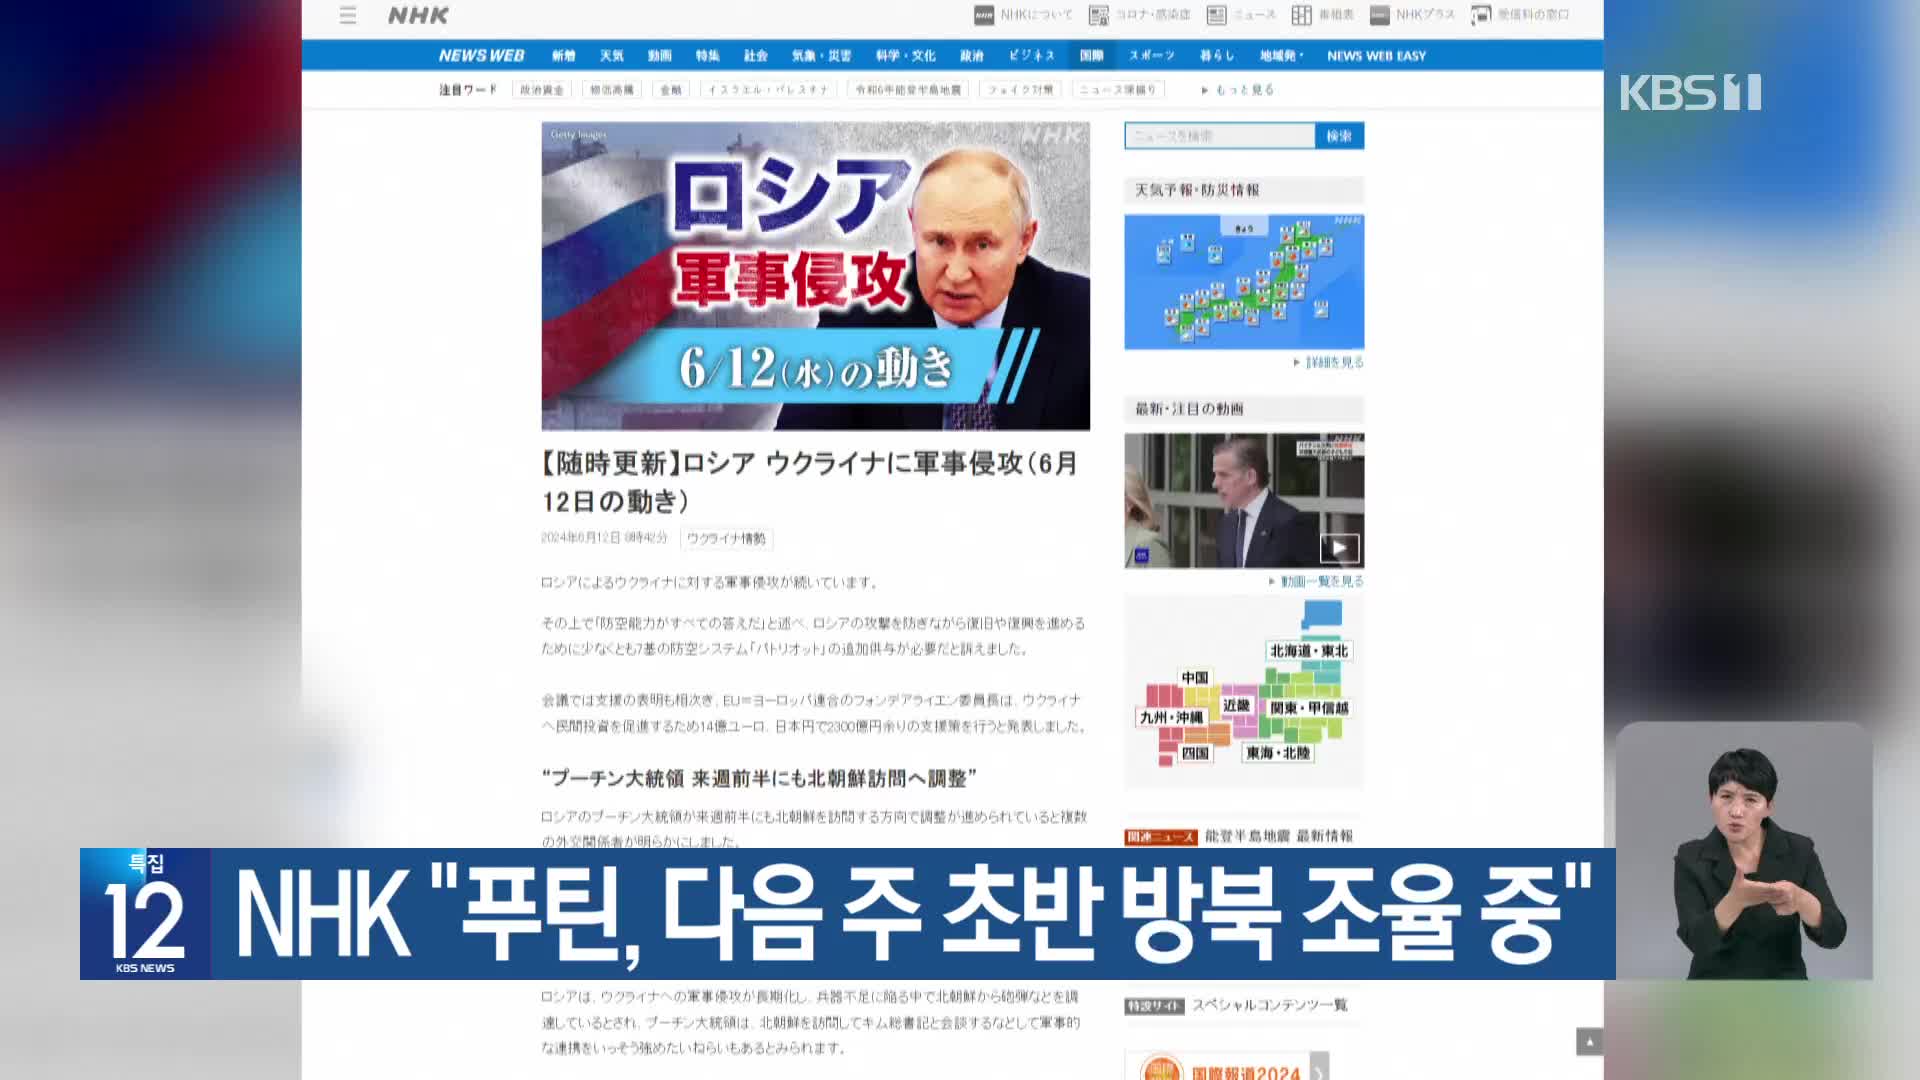 NHK “푸틴, 다음 주 초반 방북 조율 중”